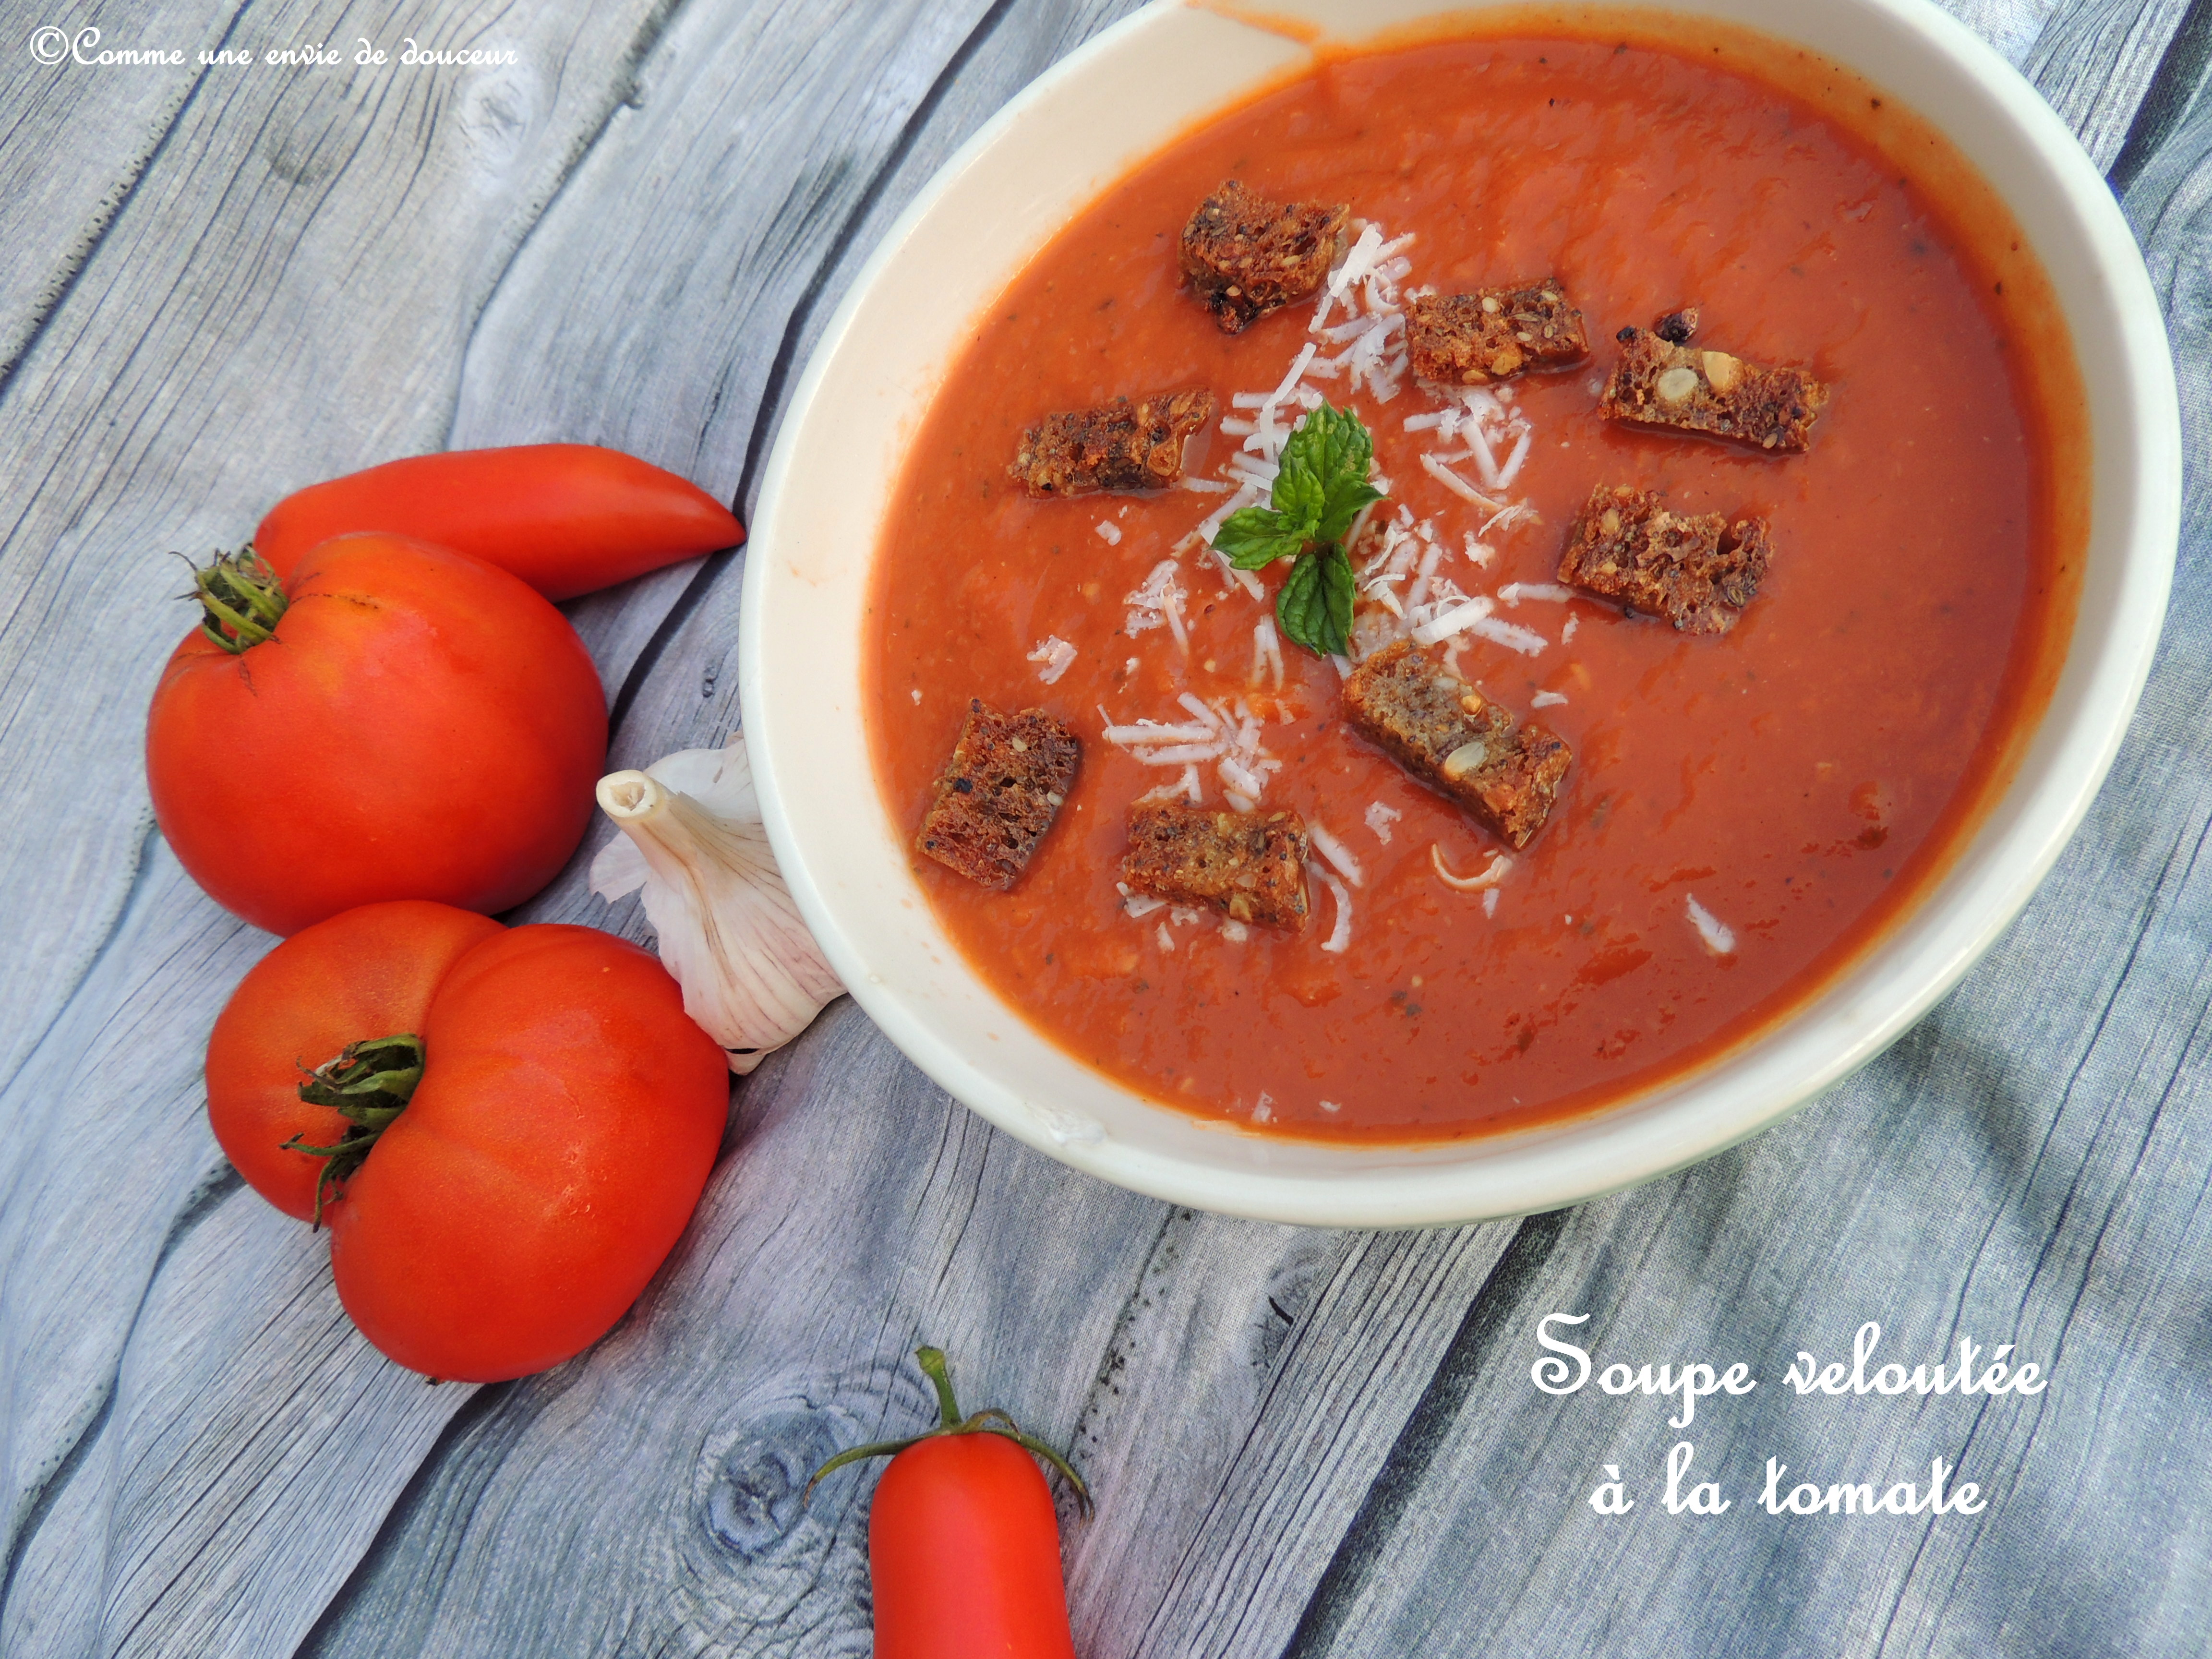 Soupe à la tomate – Tomato soup